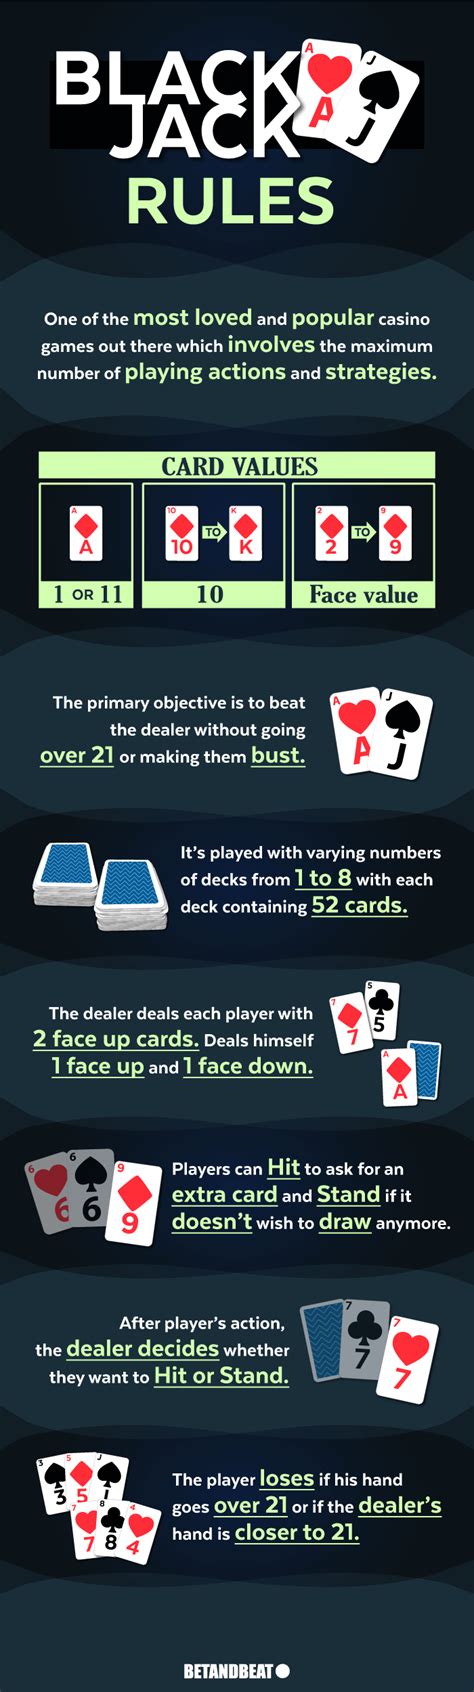 black jack card game rules